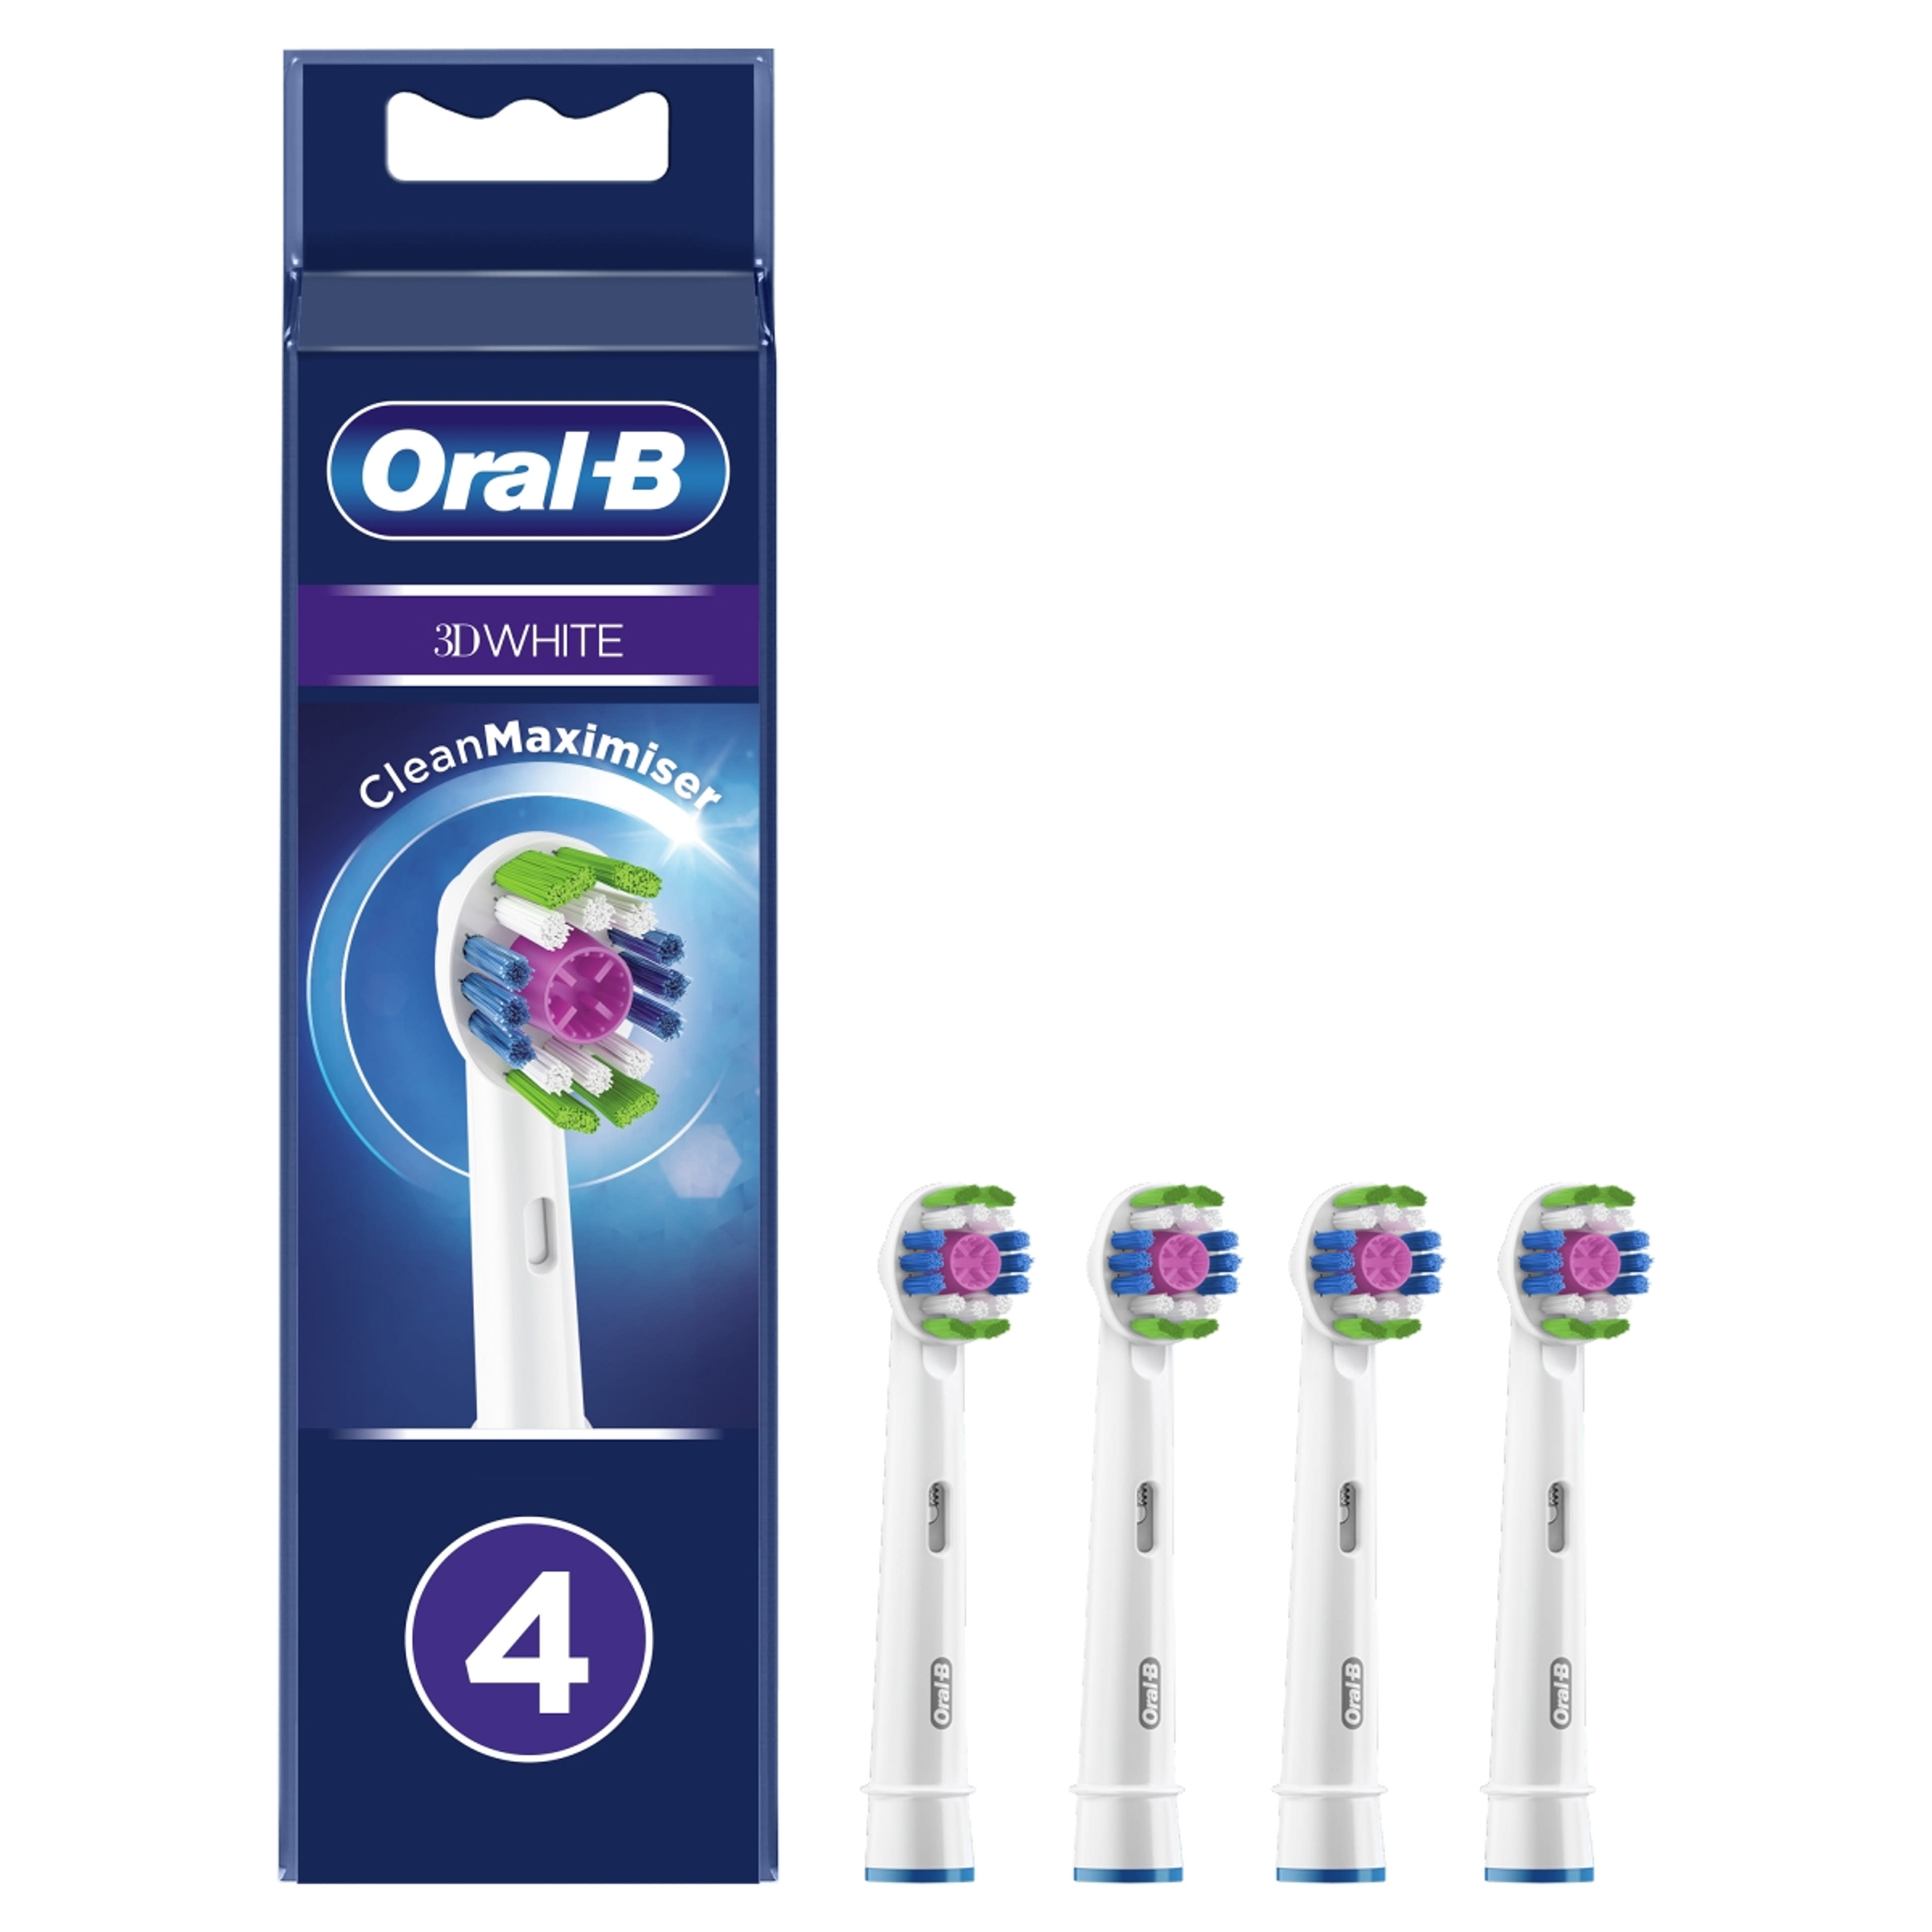 Oral-B 3D White fogkefefej - 4 db-8